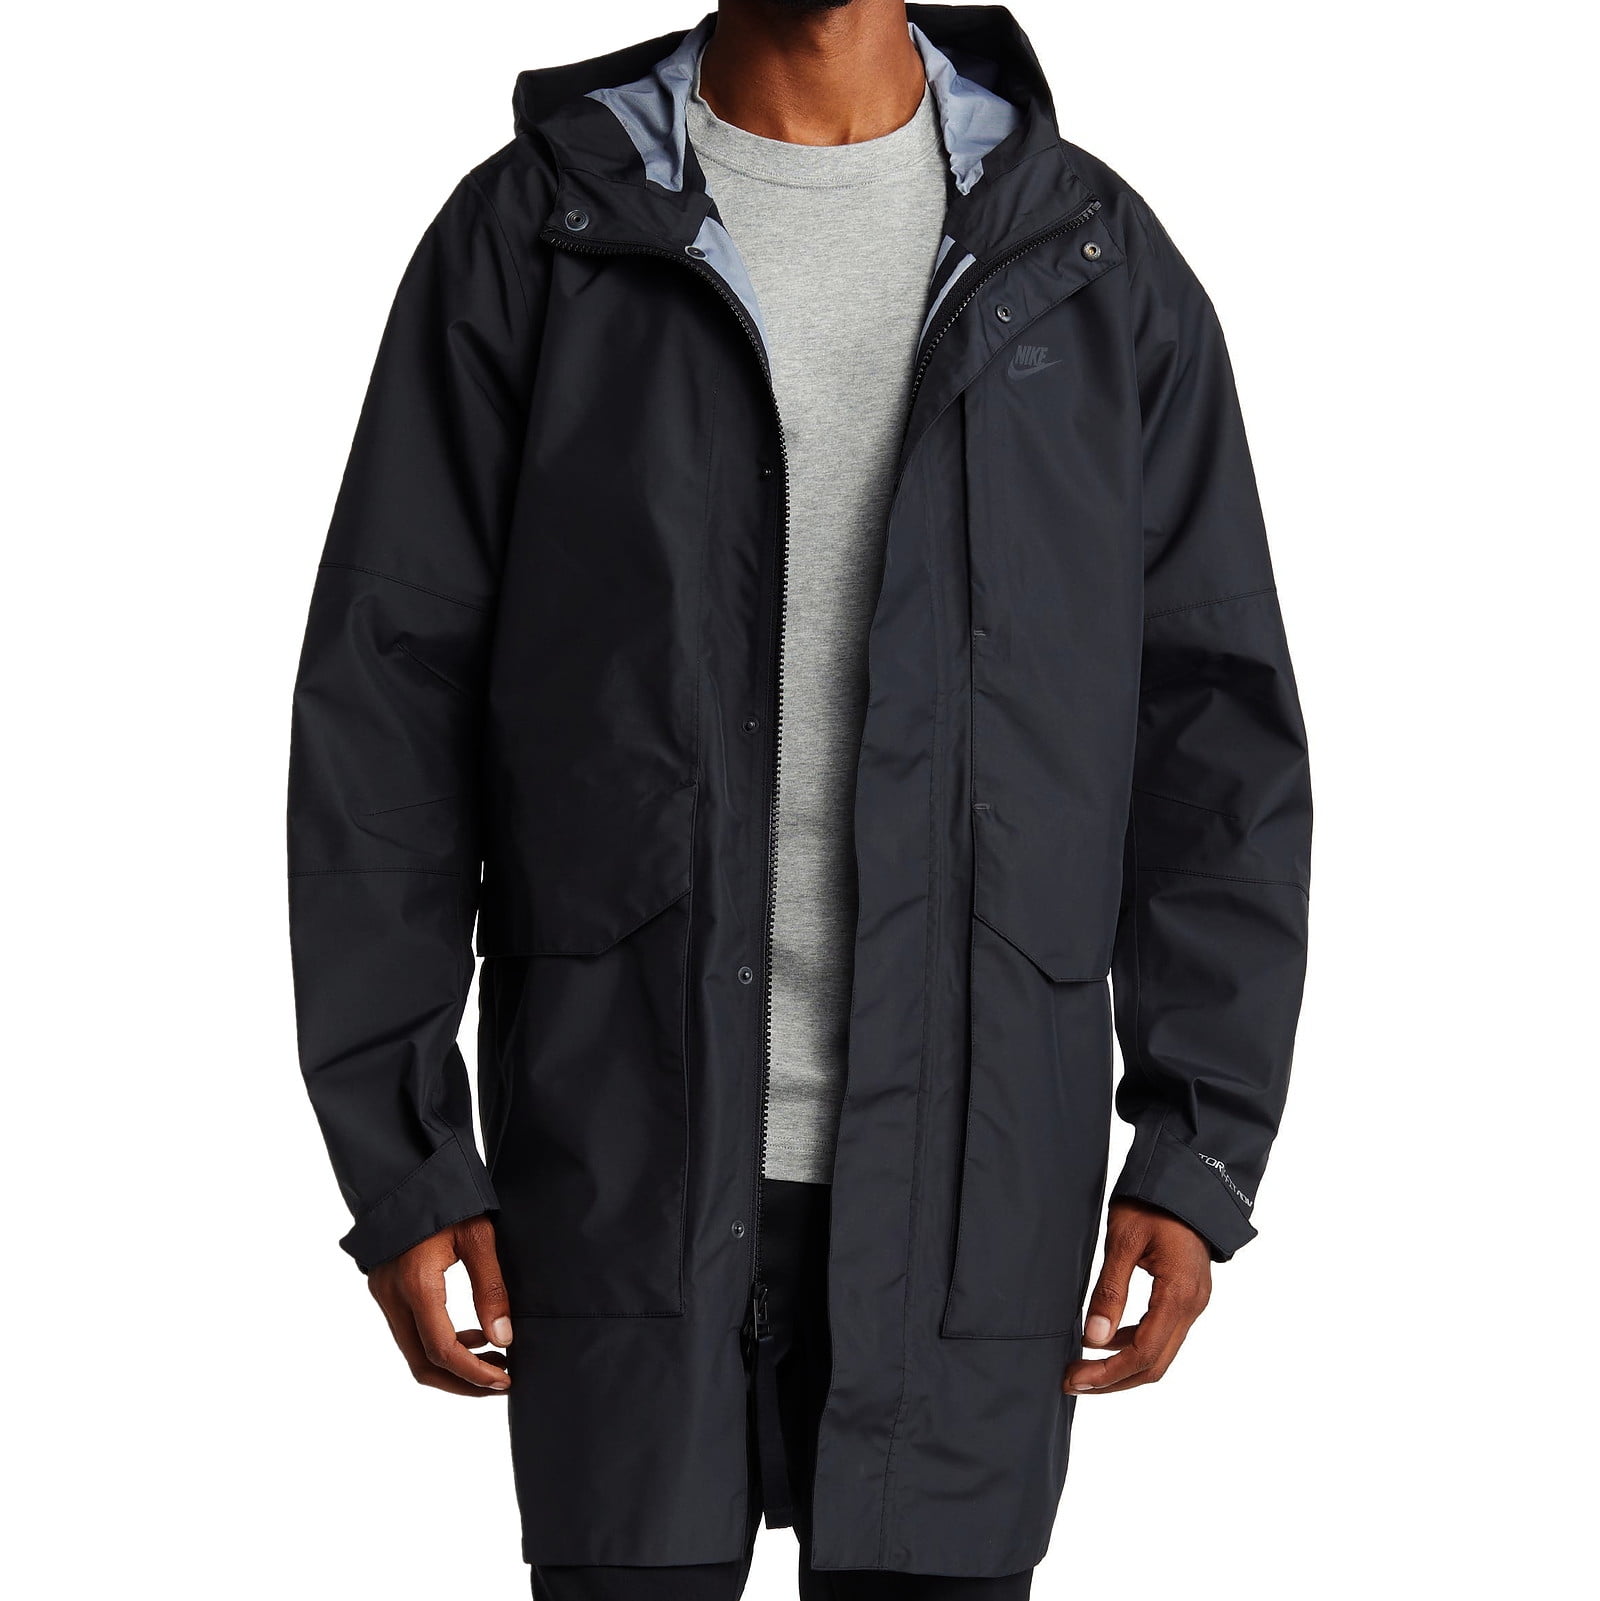 Shell Mens (2XLarge, Sportswear Parka ADV Nike Storm-Fit Black) Jacket